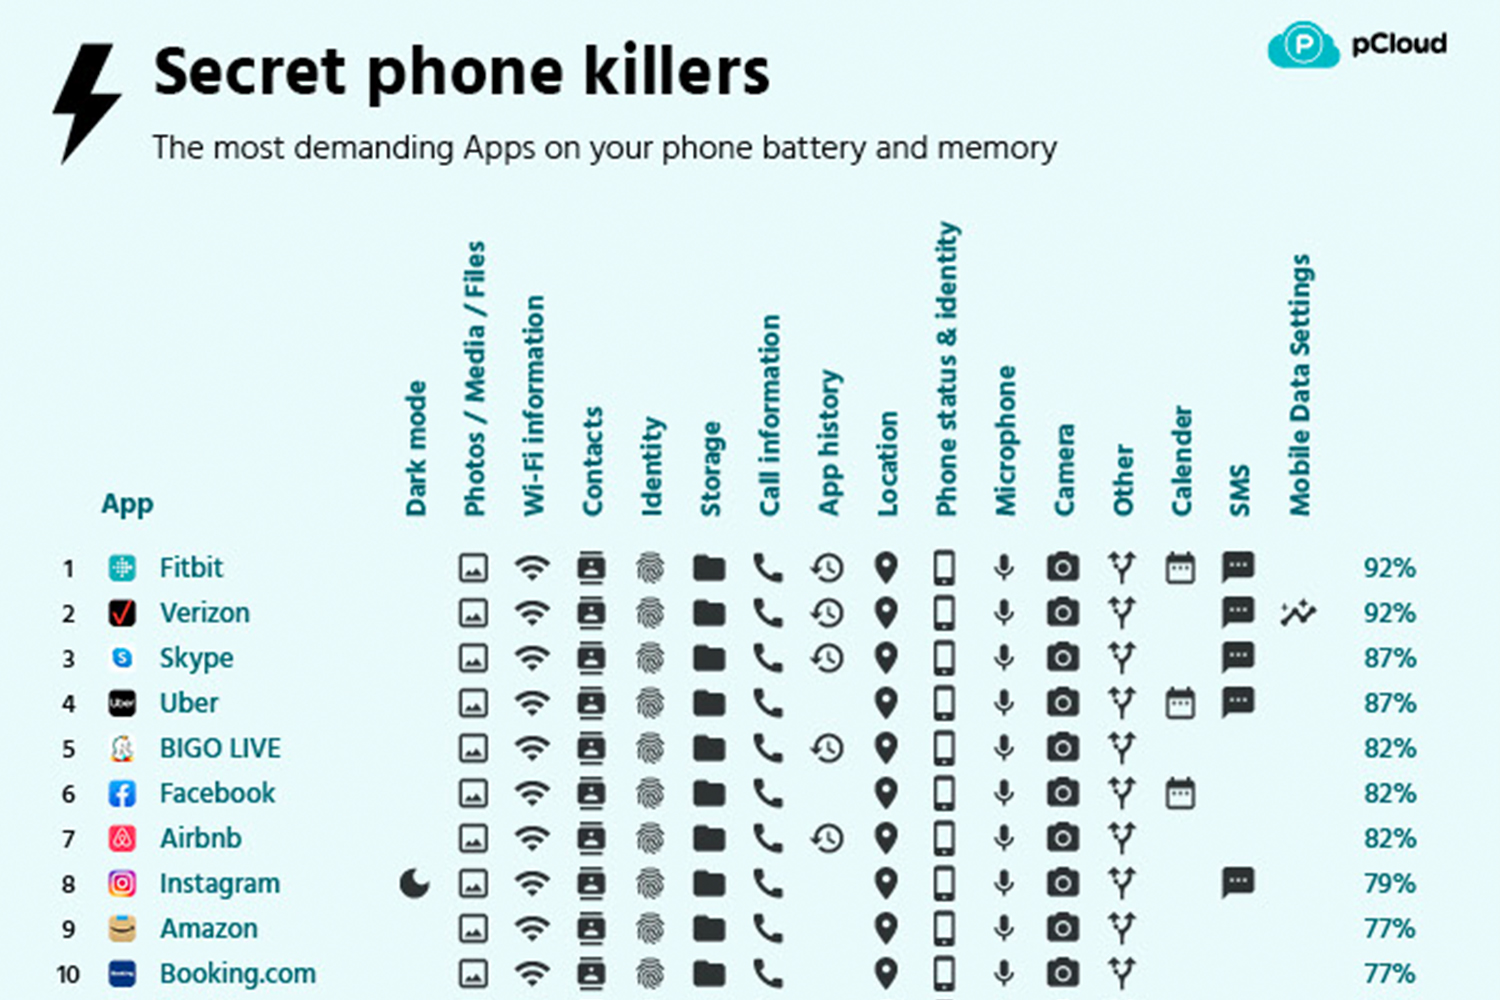 Secret Phone Killers list from pCloud